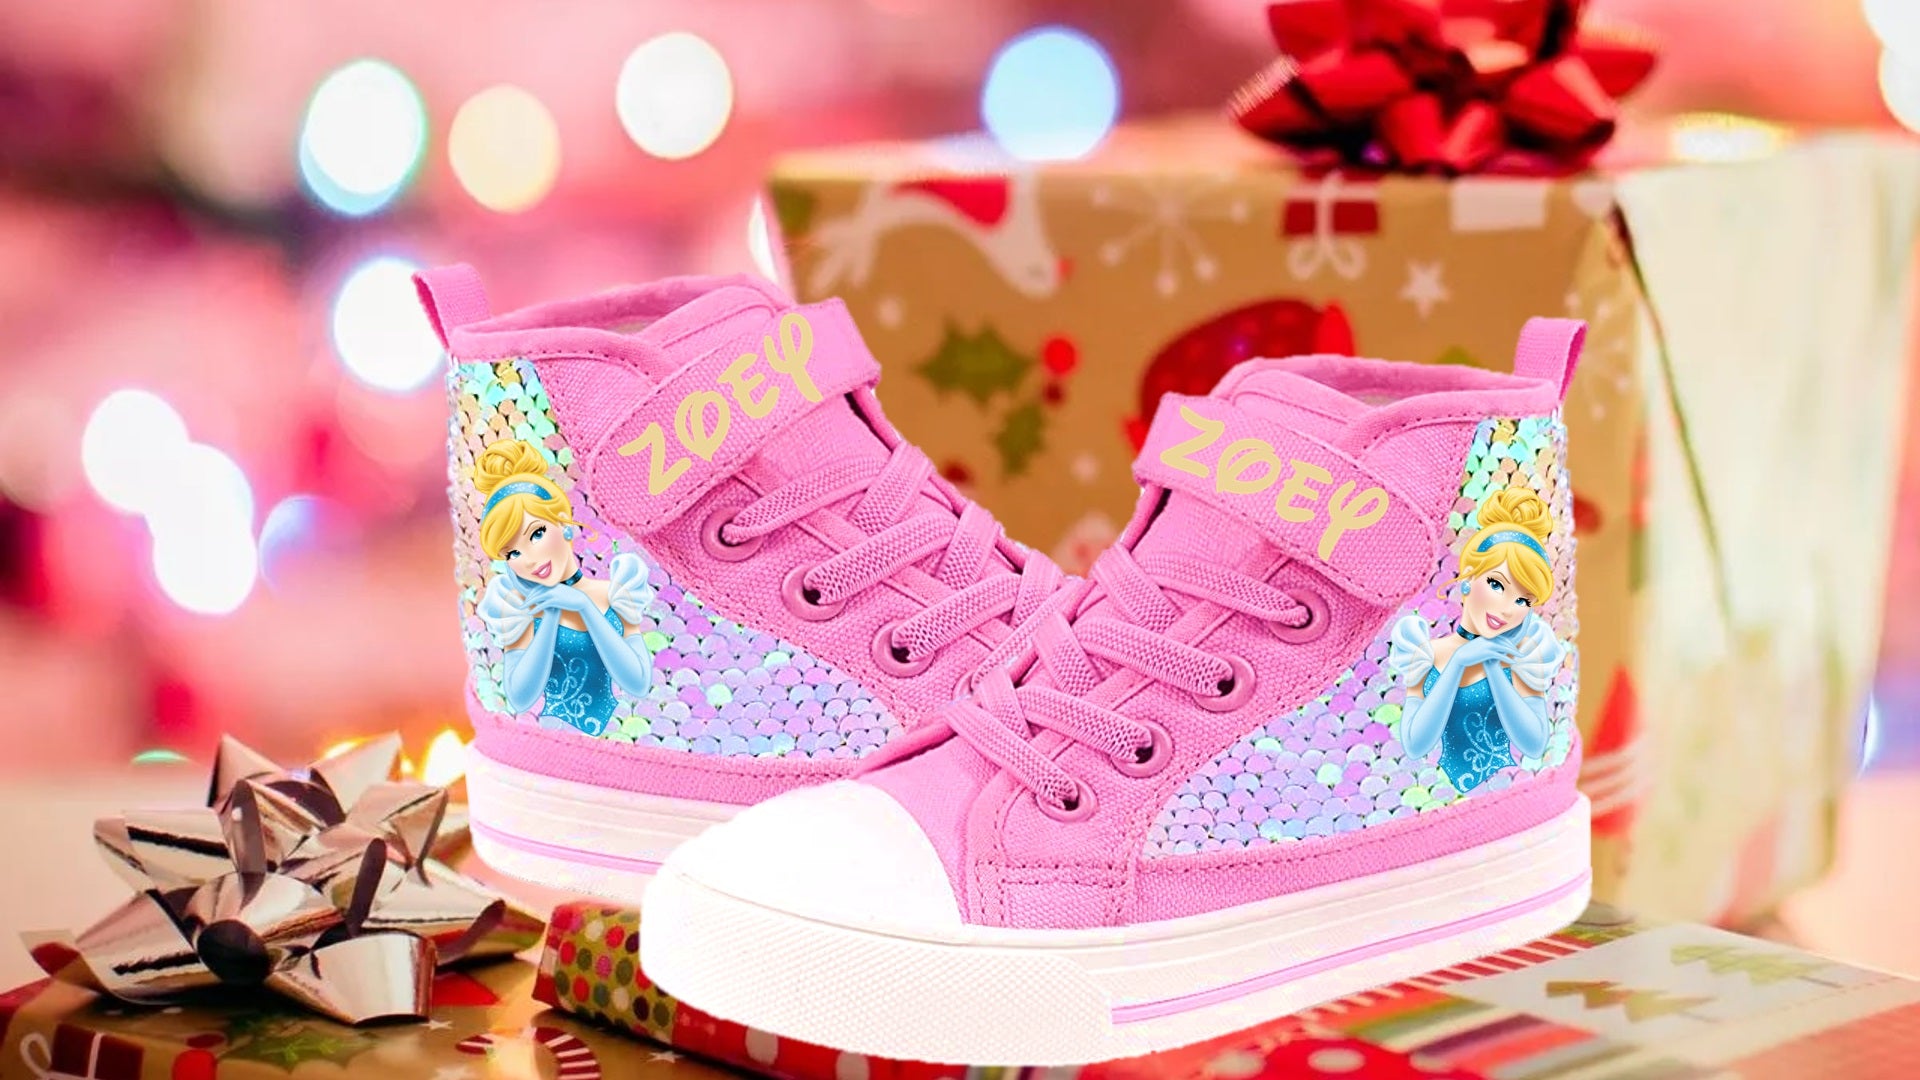 Kids Disney Princess Cinderella Shoes